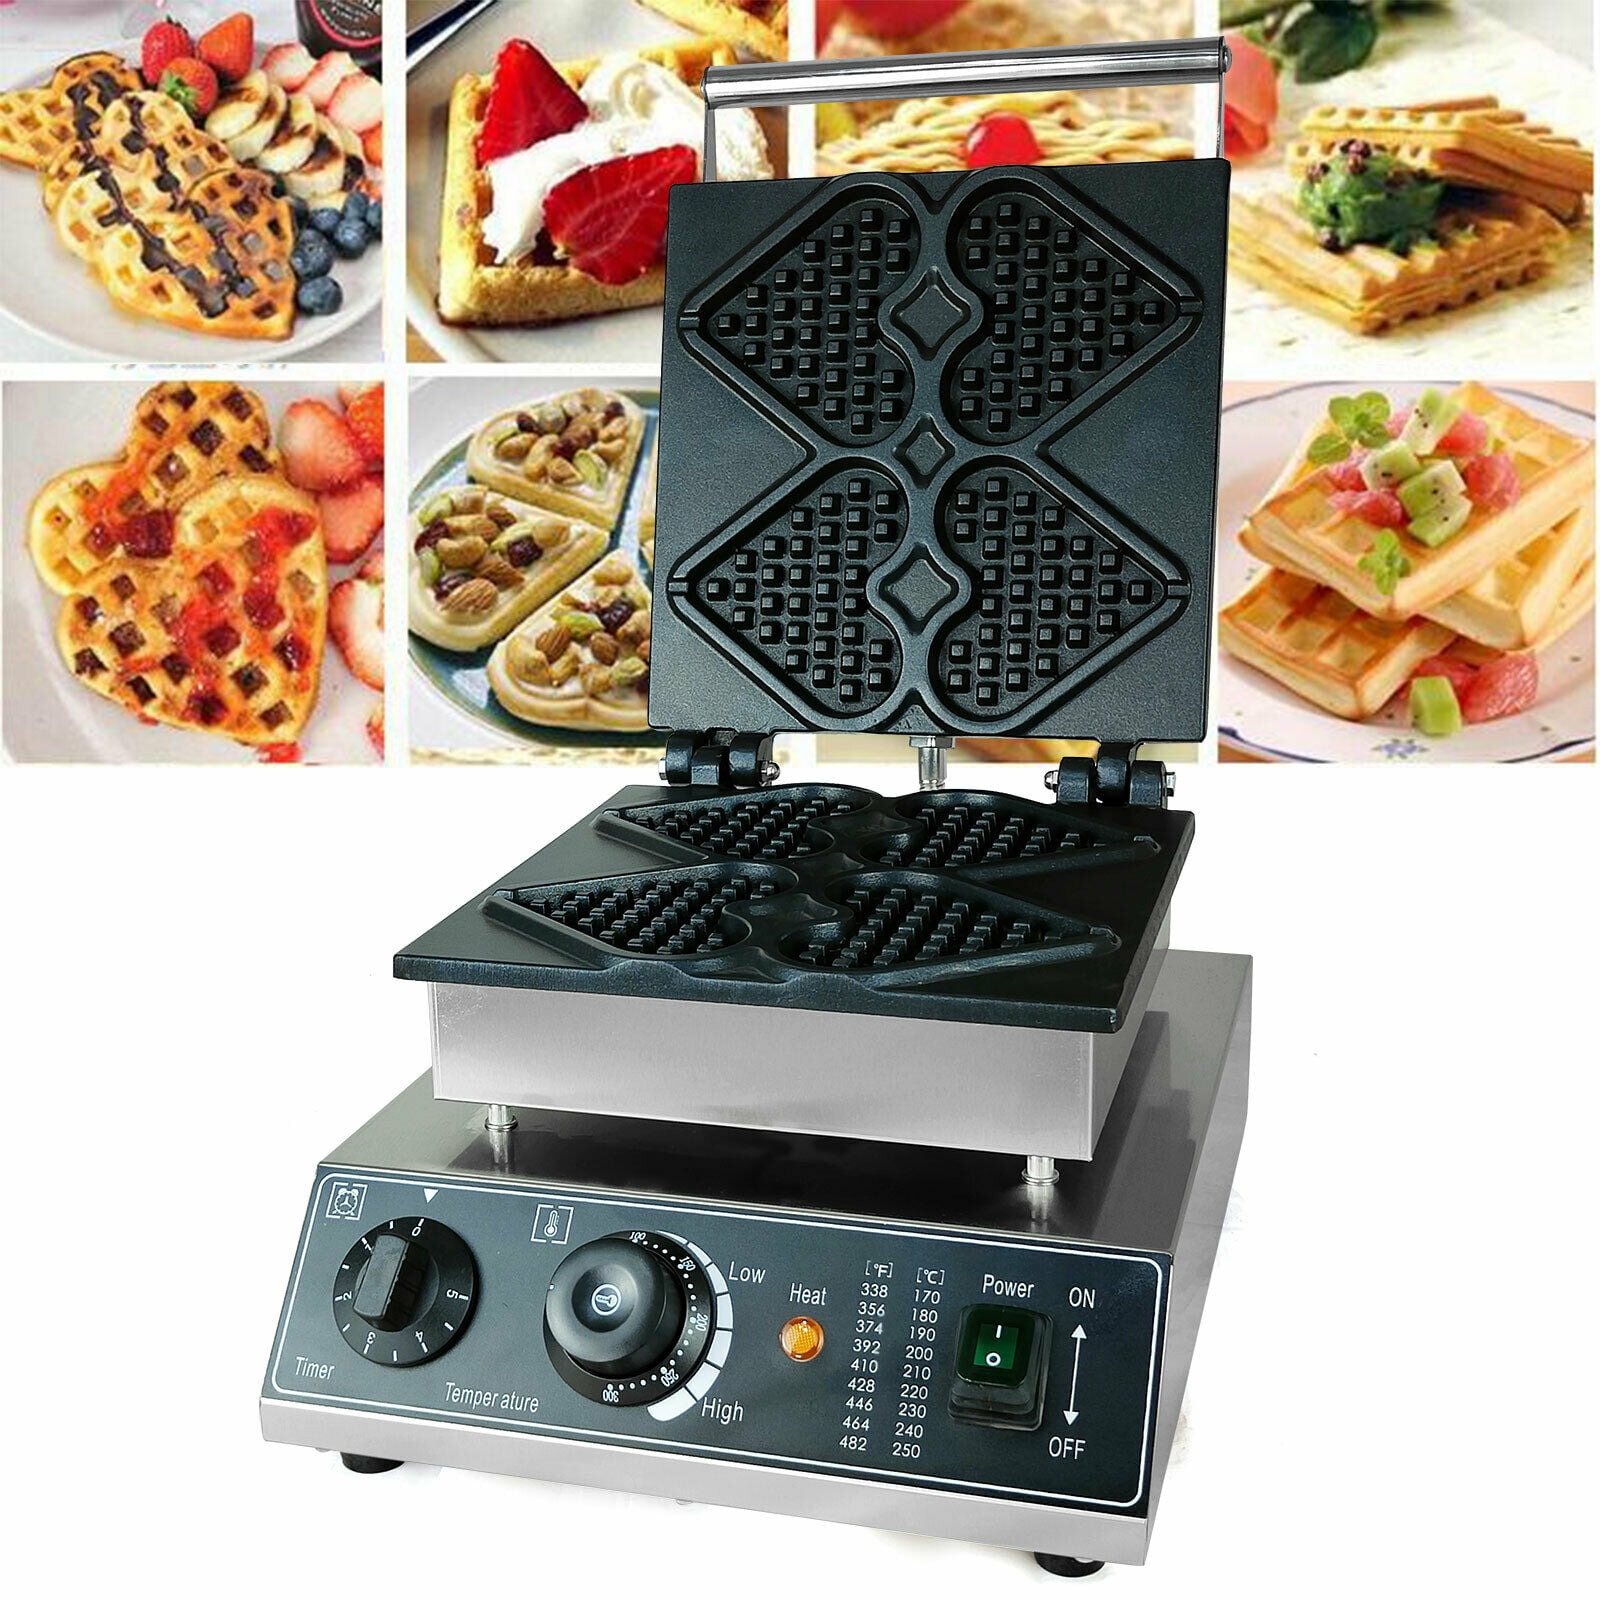 US Plug 110V Ladieshow 25-Holes 950W Electric Rapid Heating Waffle Maker Muffin Pancake Machine Kitchen Appliance 